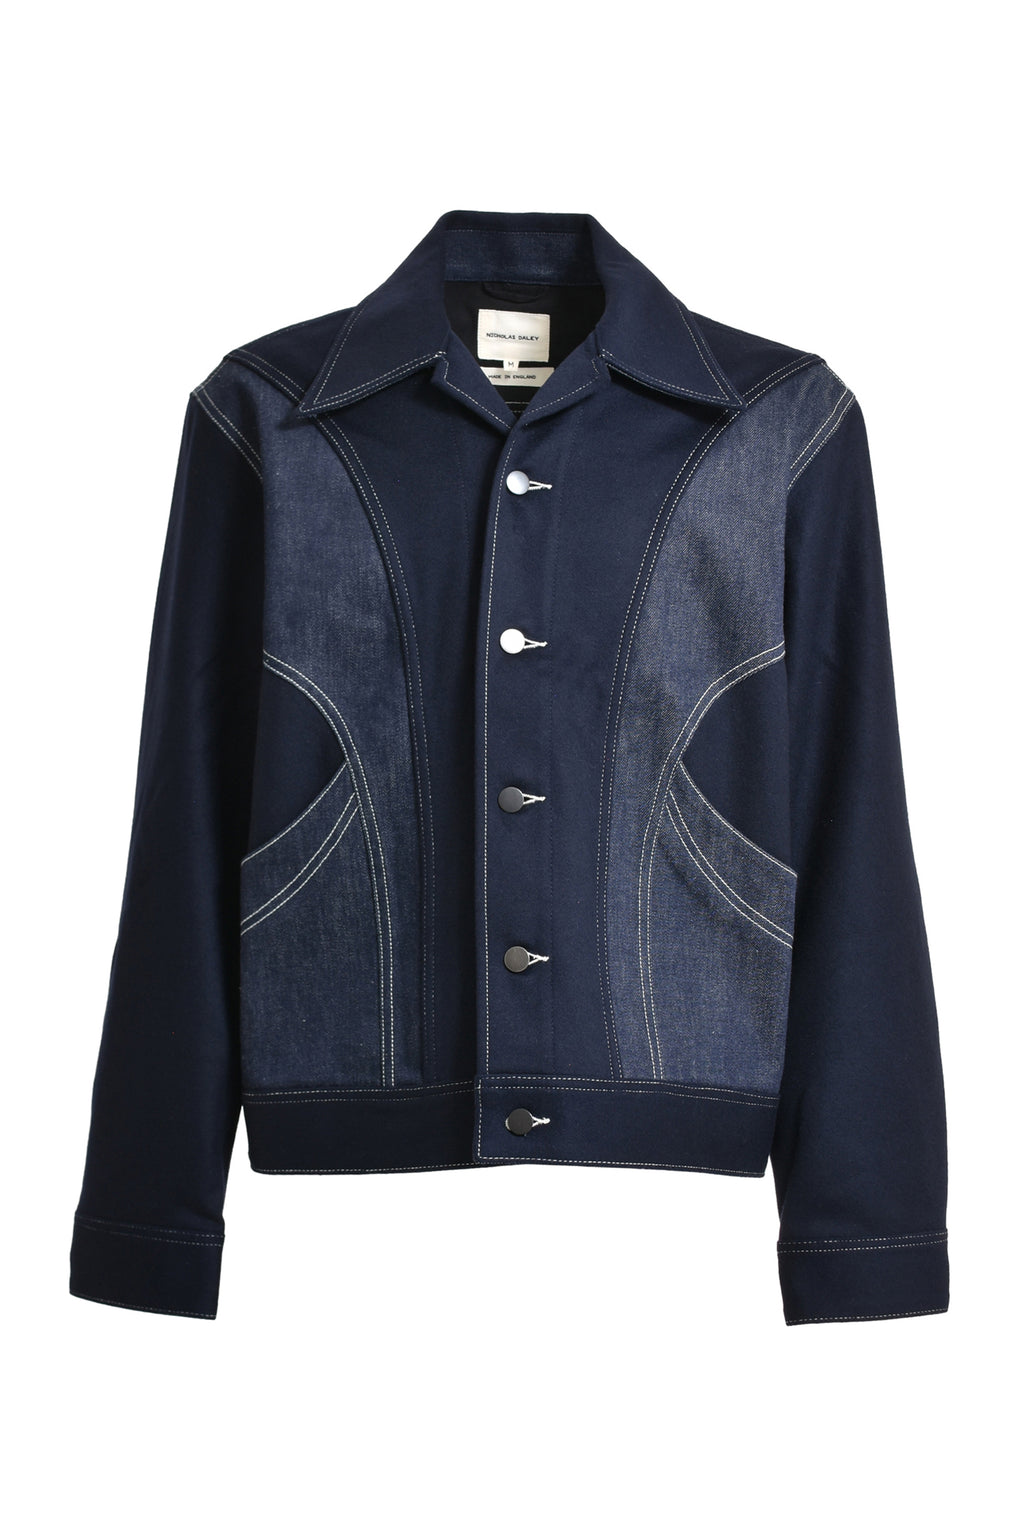 Kenzo Men's Mixed Pinstripe Denim Workwear Jacket